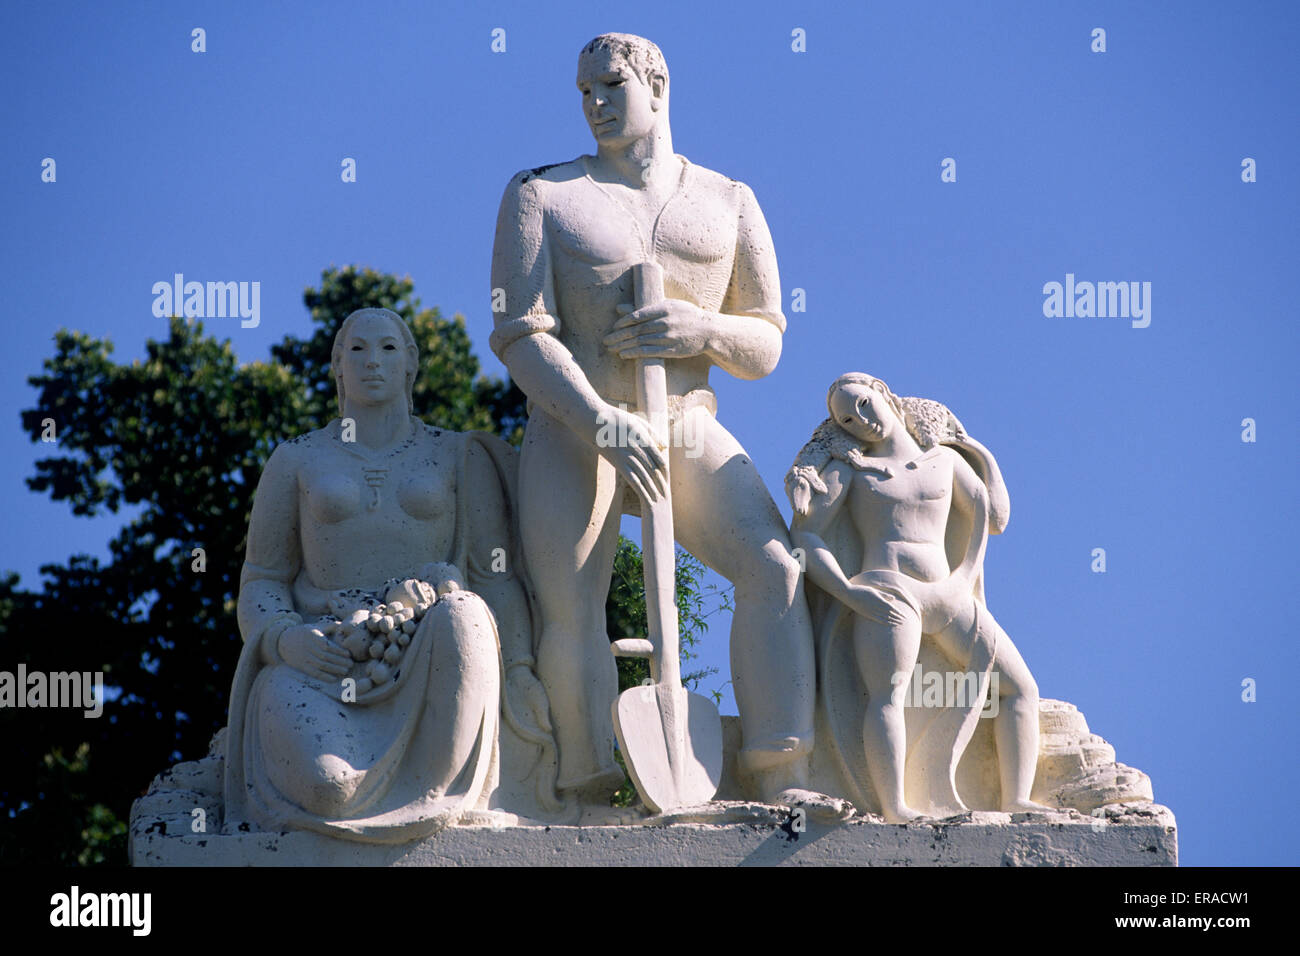 Italien, Latium, Latina, Piazza del Quadrato, faschistische Skulptur namens Famiglie Rurali (ländliche Familien) von Egisto Caldana Stockfoto